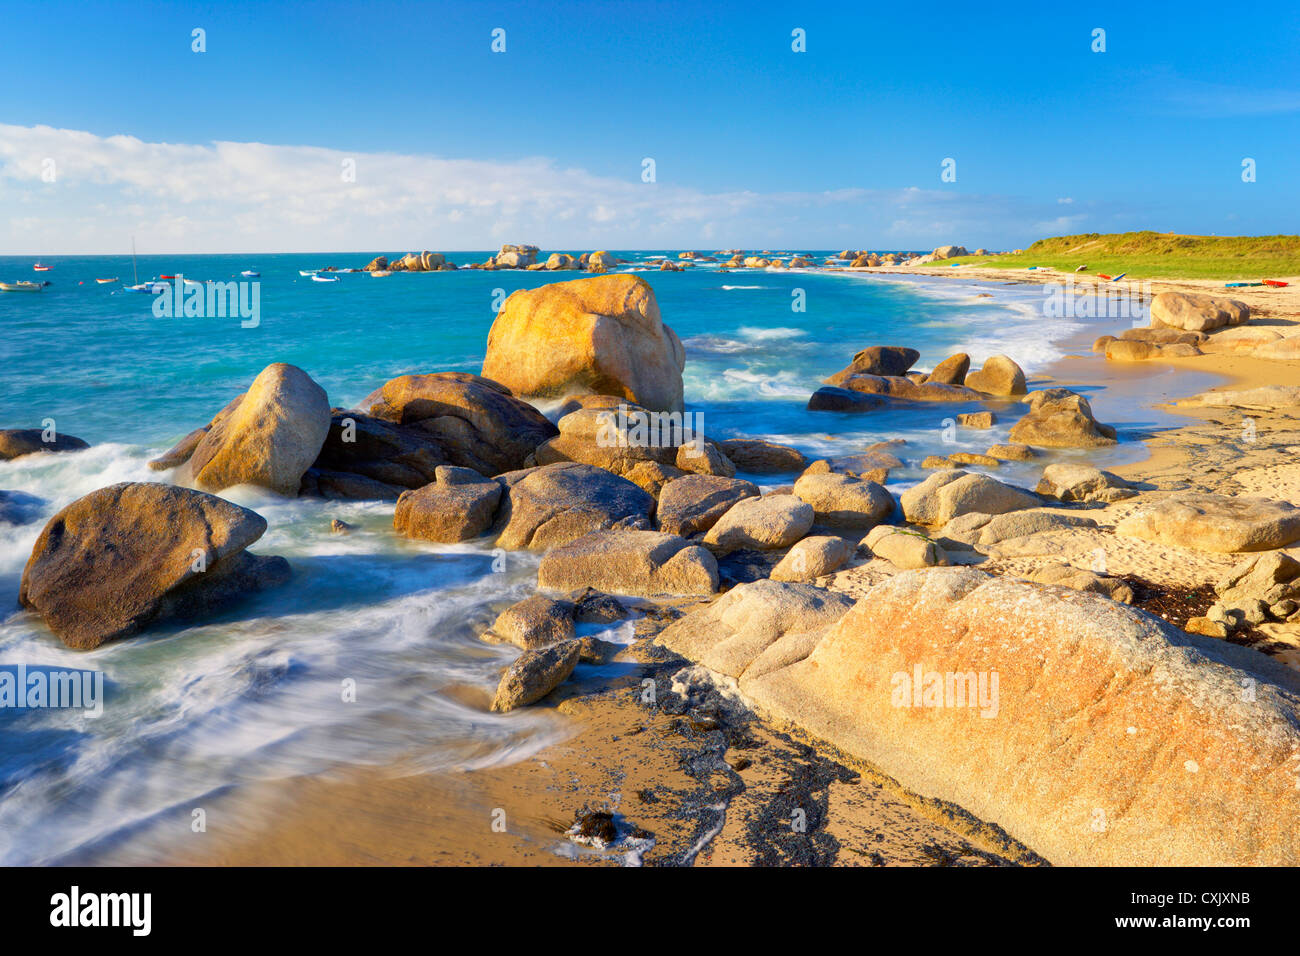 Rocky Coastline and Beach, Brignogan-Plage, Finistere, Brittany, France Stock Photo